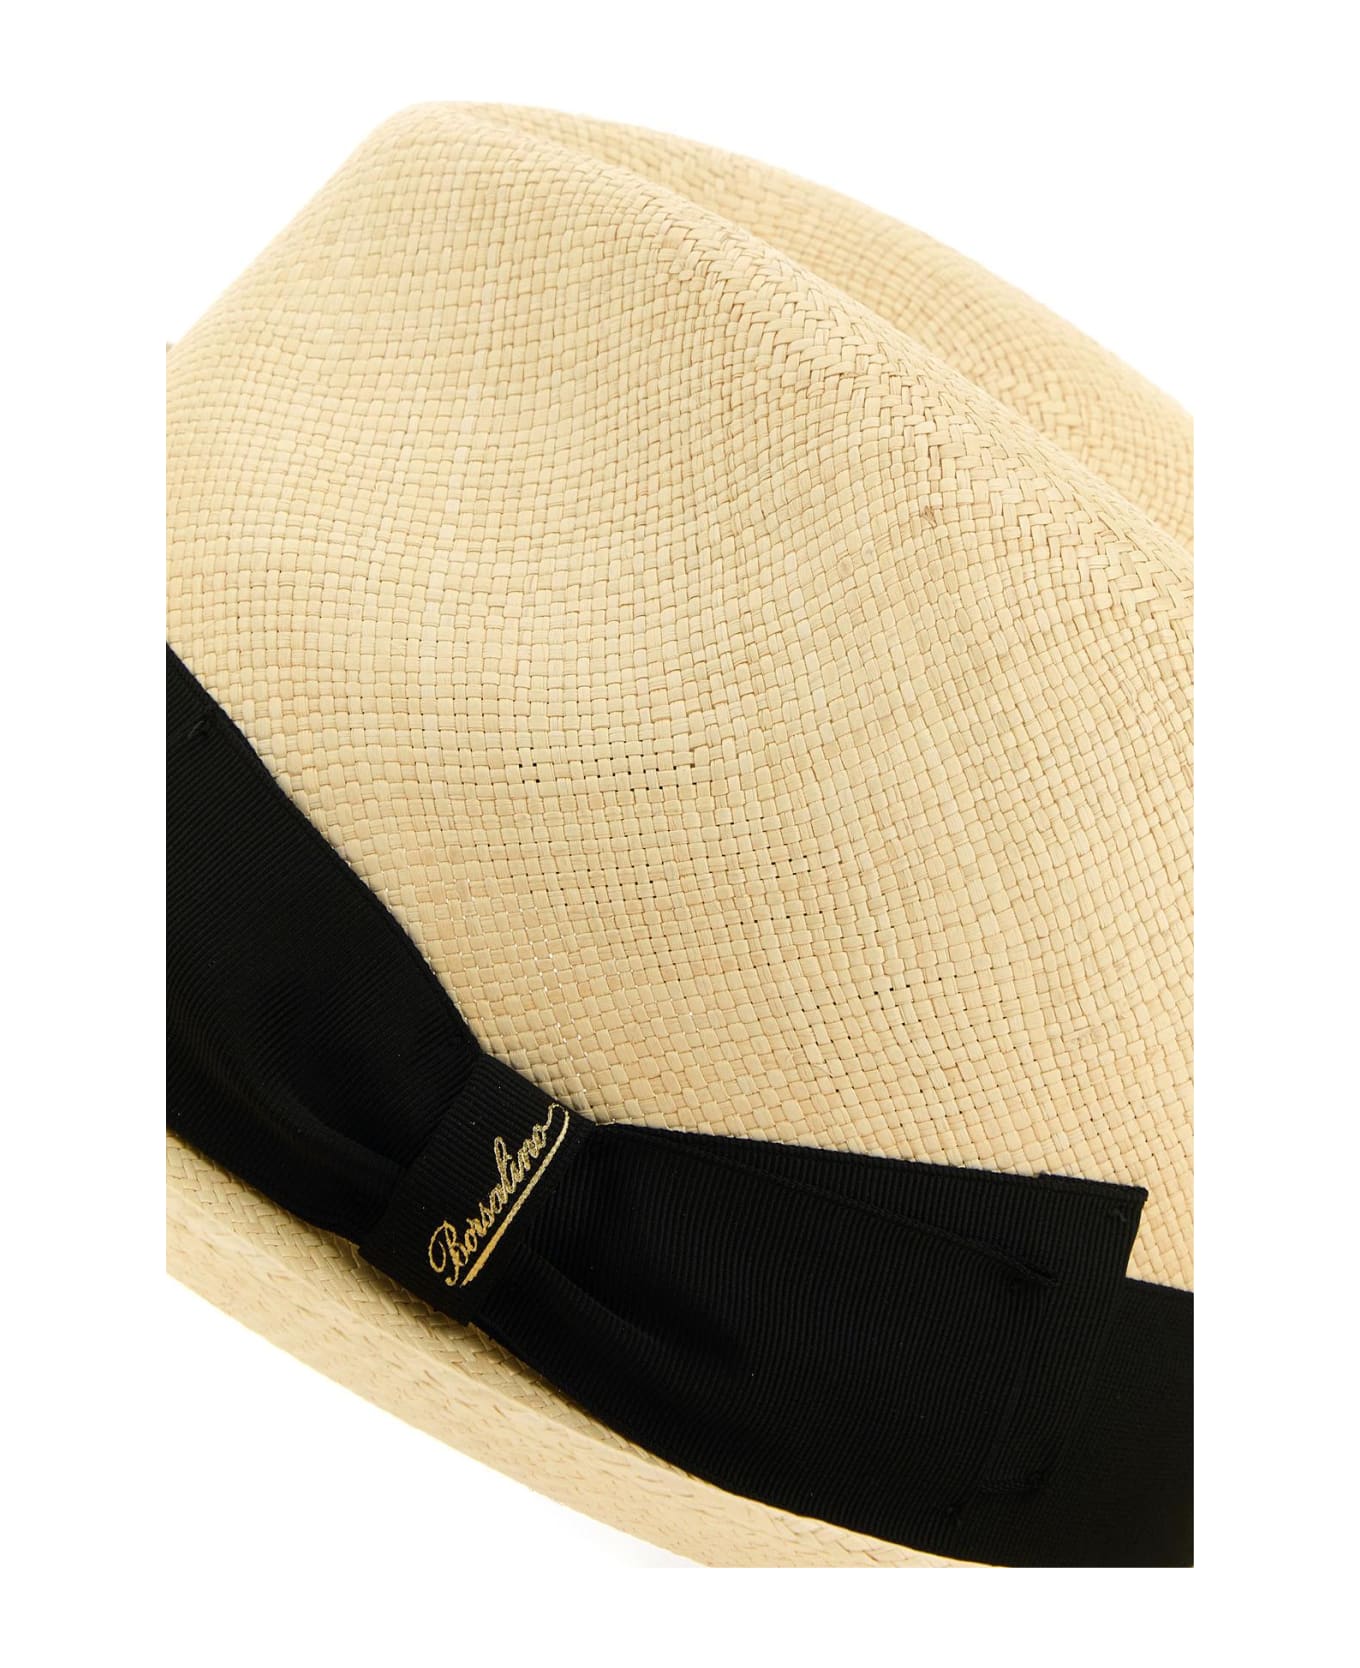 Borsalino Straw Hat - Black